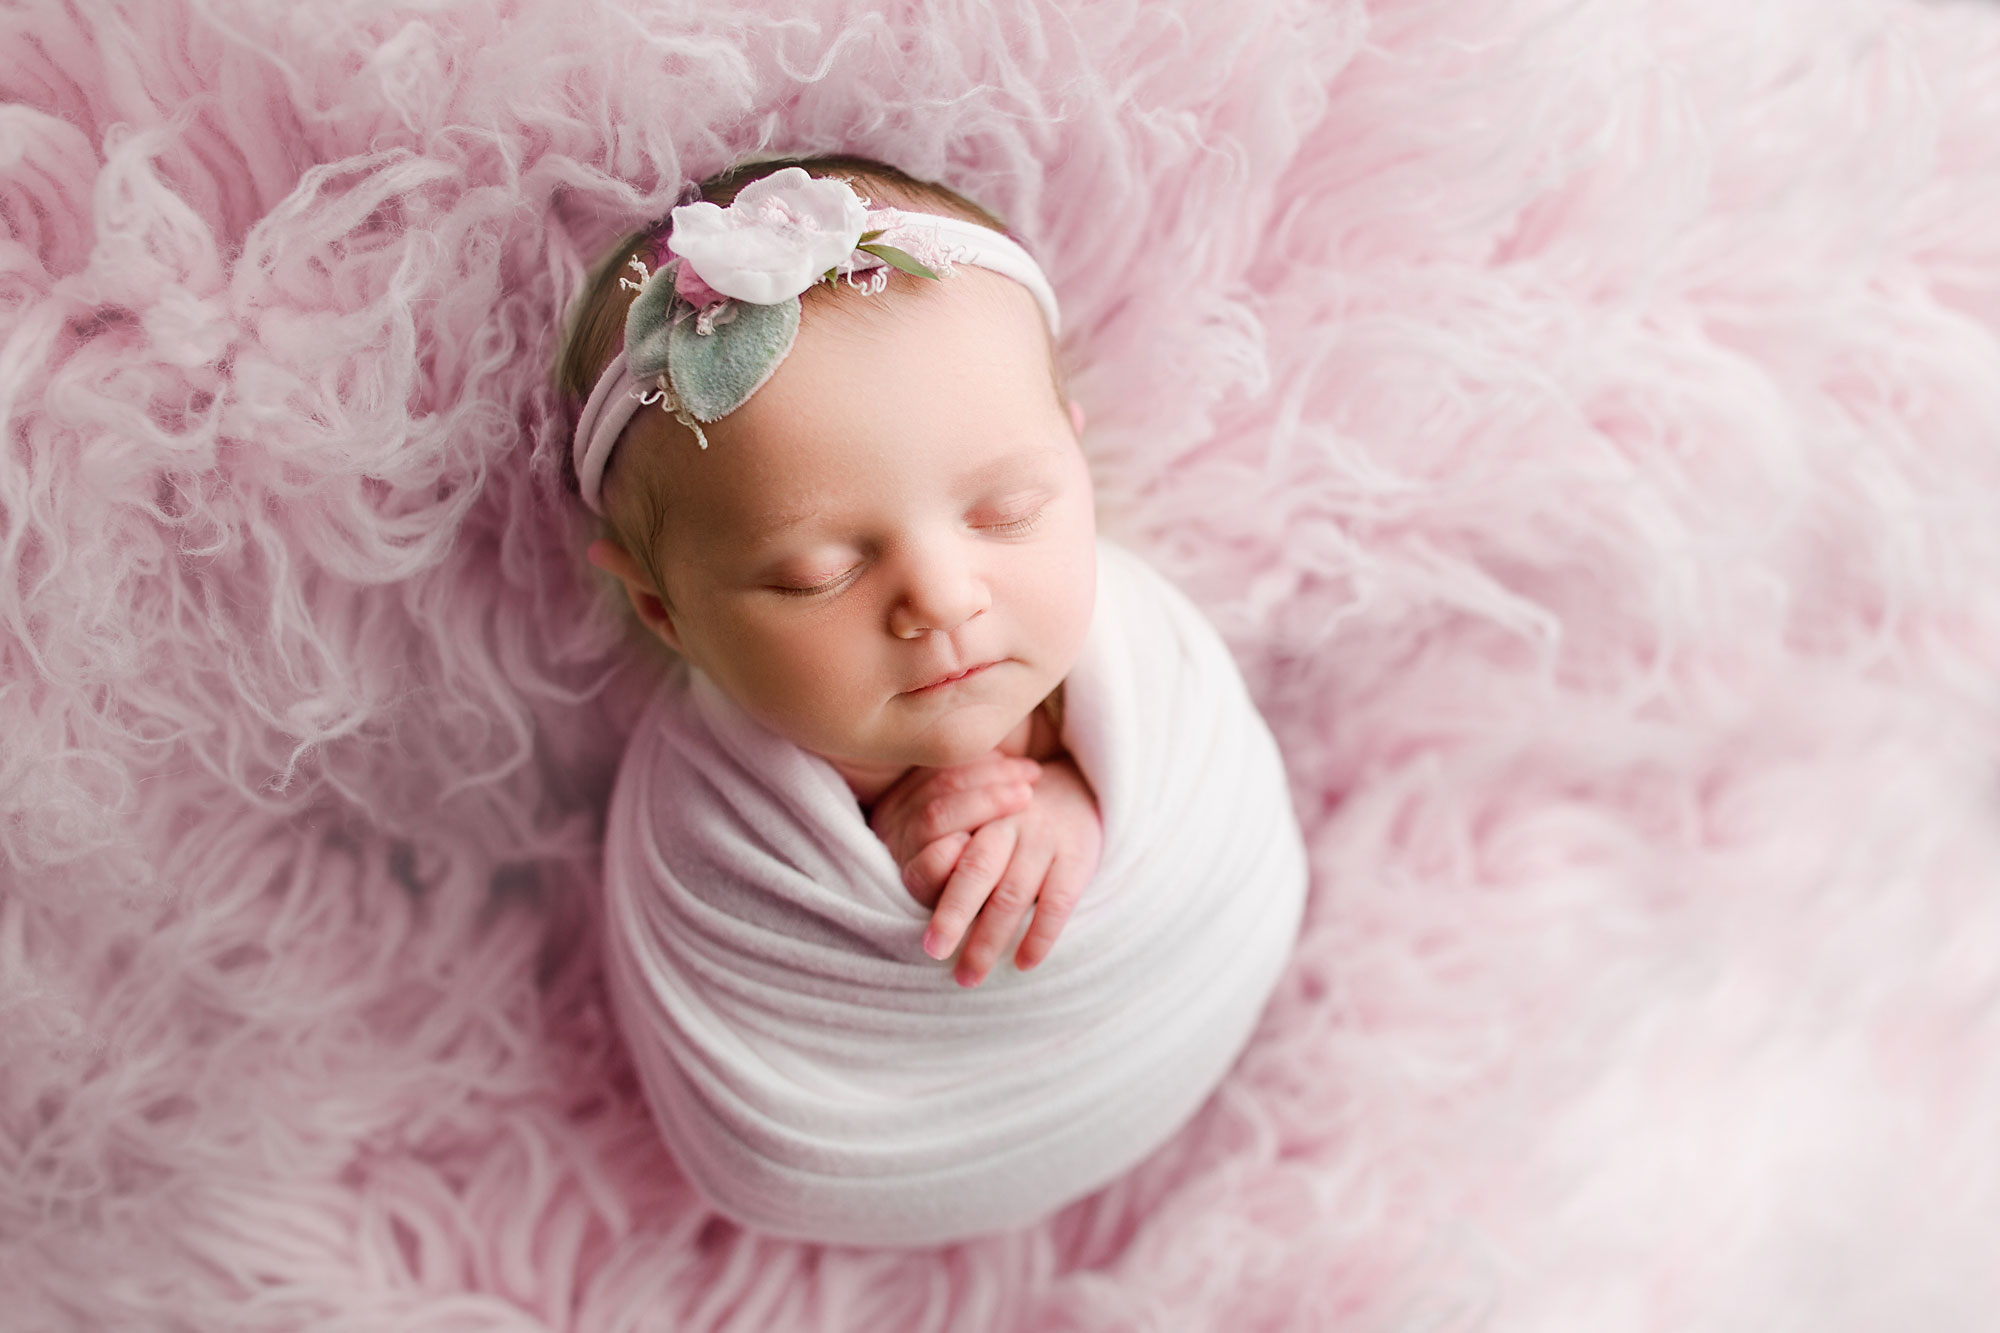 flemington nj baby girl sleeping on a pink flokati